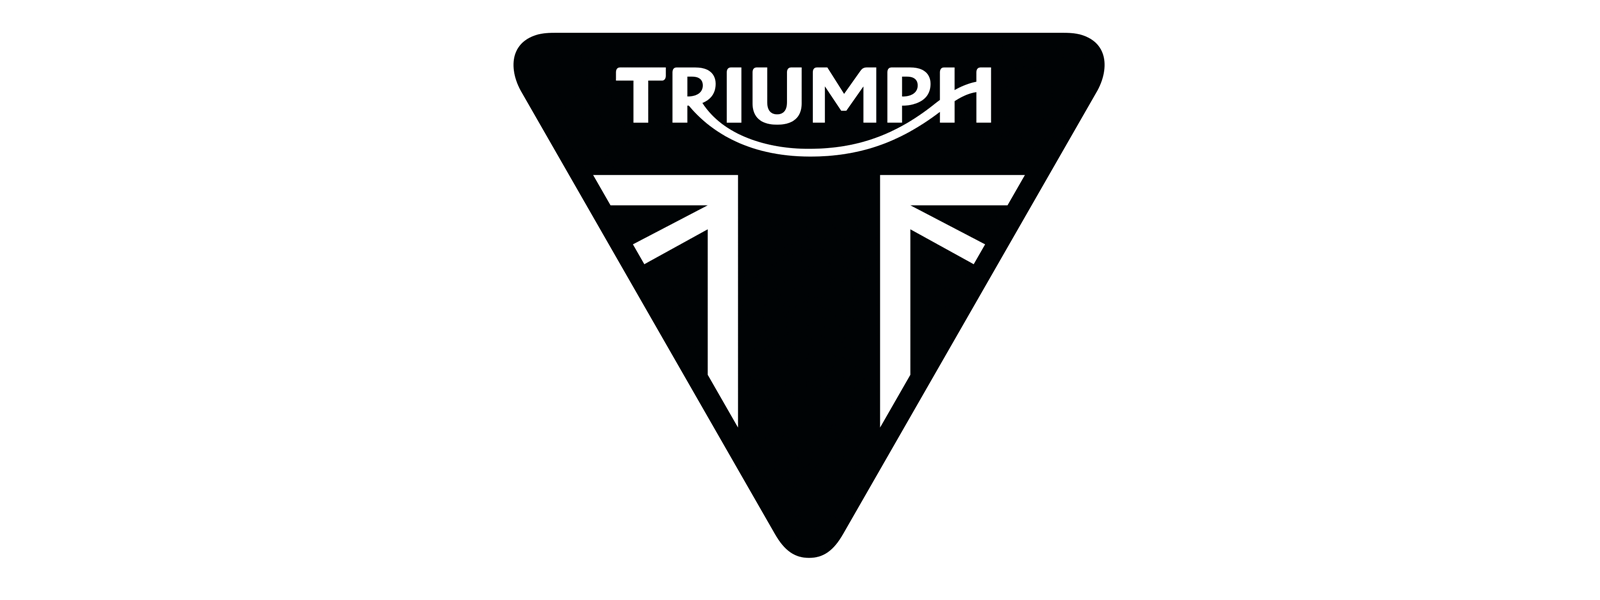 Triumph Logo - Triumph logo | Motorcycle brands: logo, specs, history.